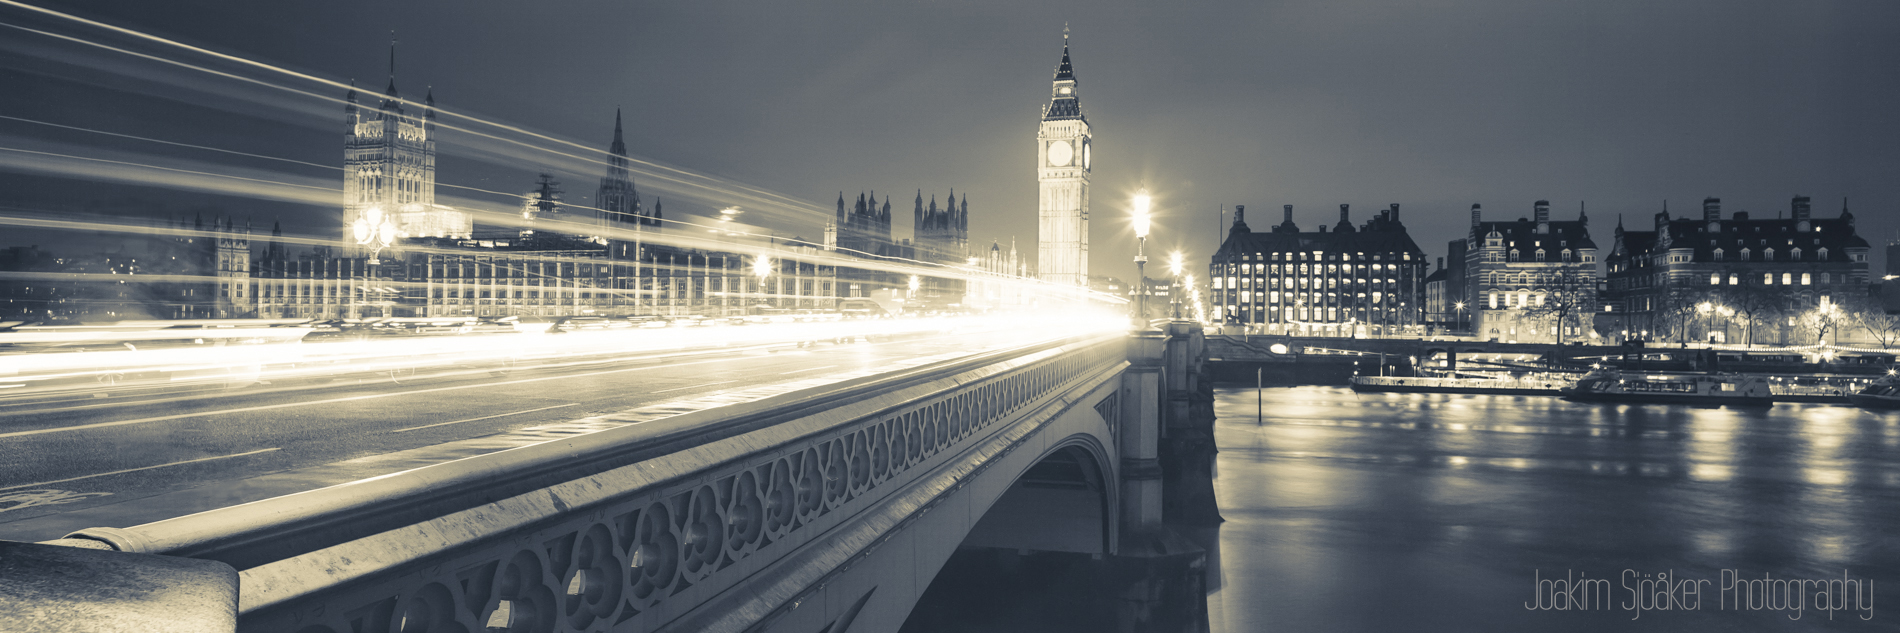 westminster bridge parliament london panorama 6x17 acros caffenol